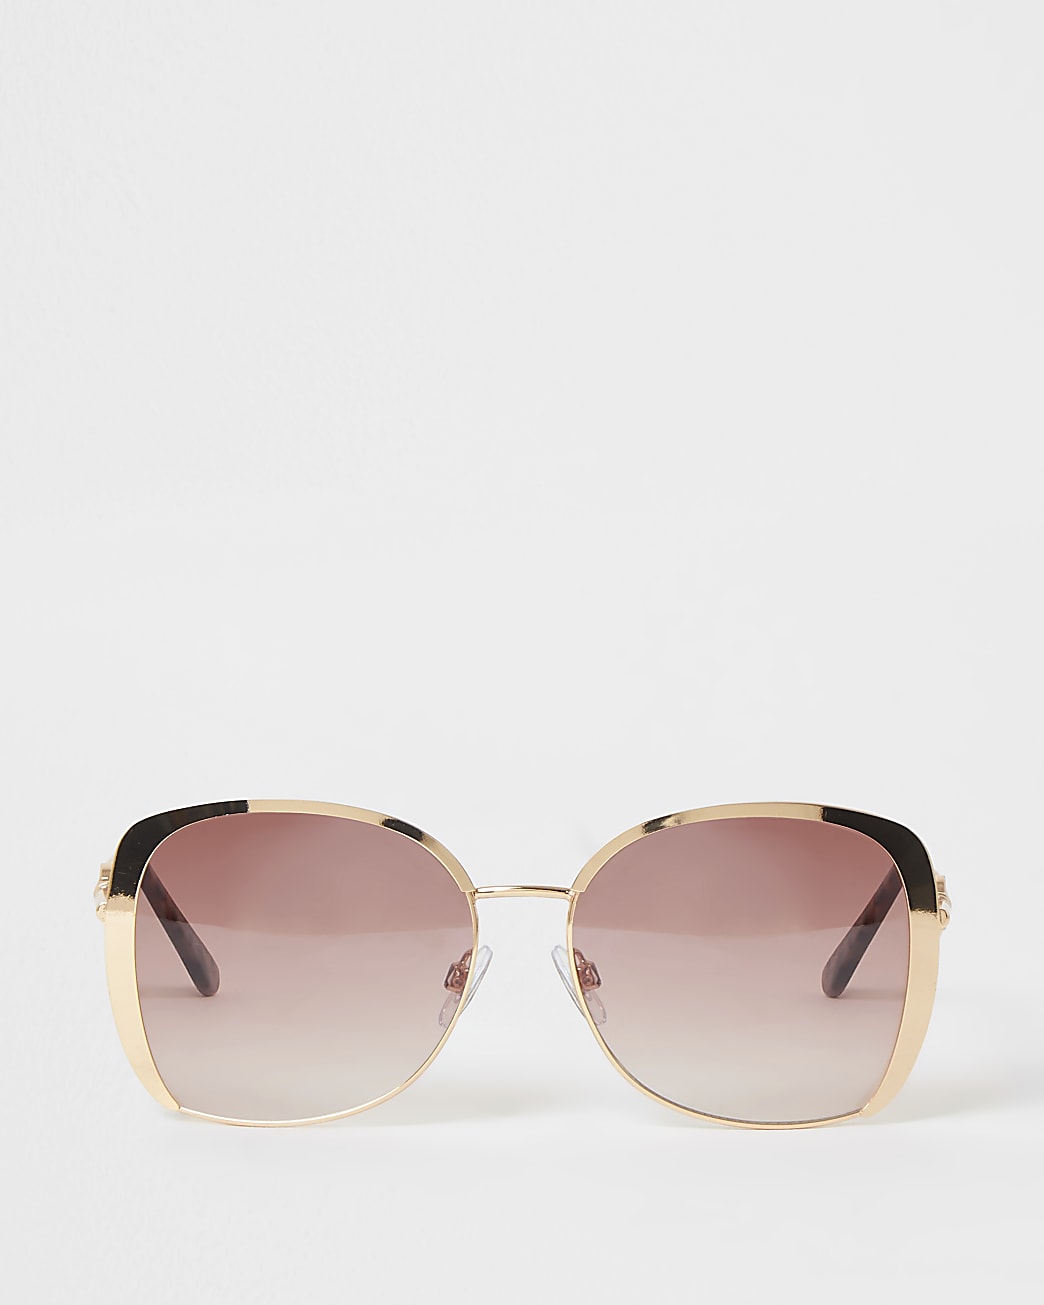 Pink iridescent round sunglasses